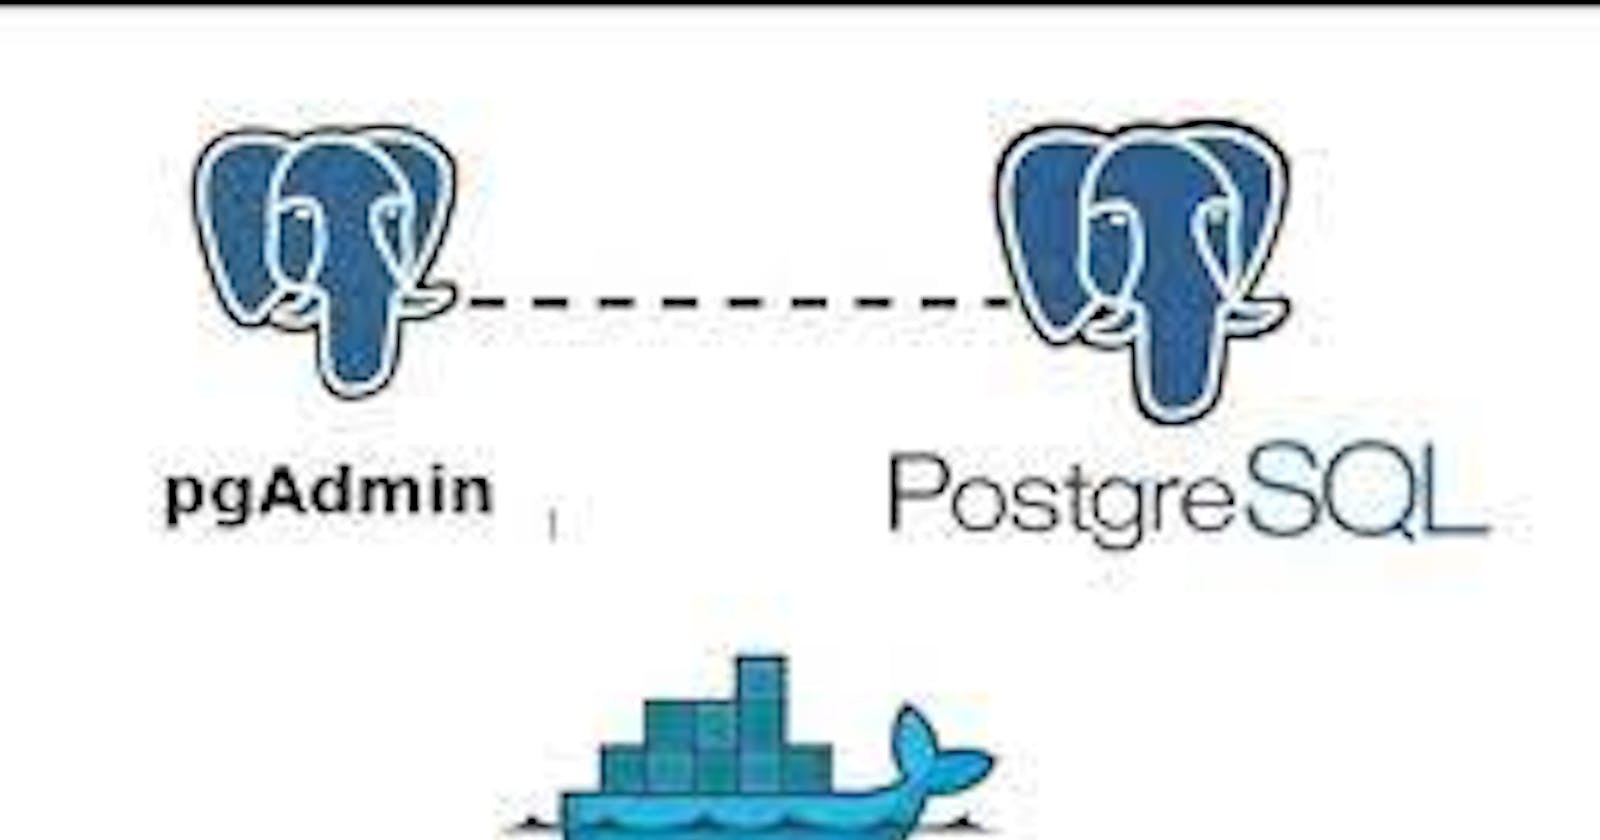 Run PostgreSQL and pgAdmin through Docker: How is it done?